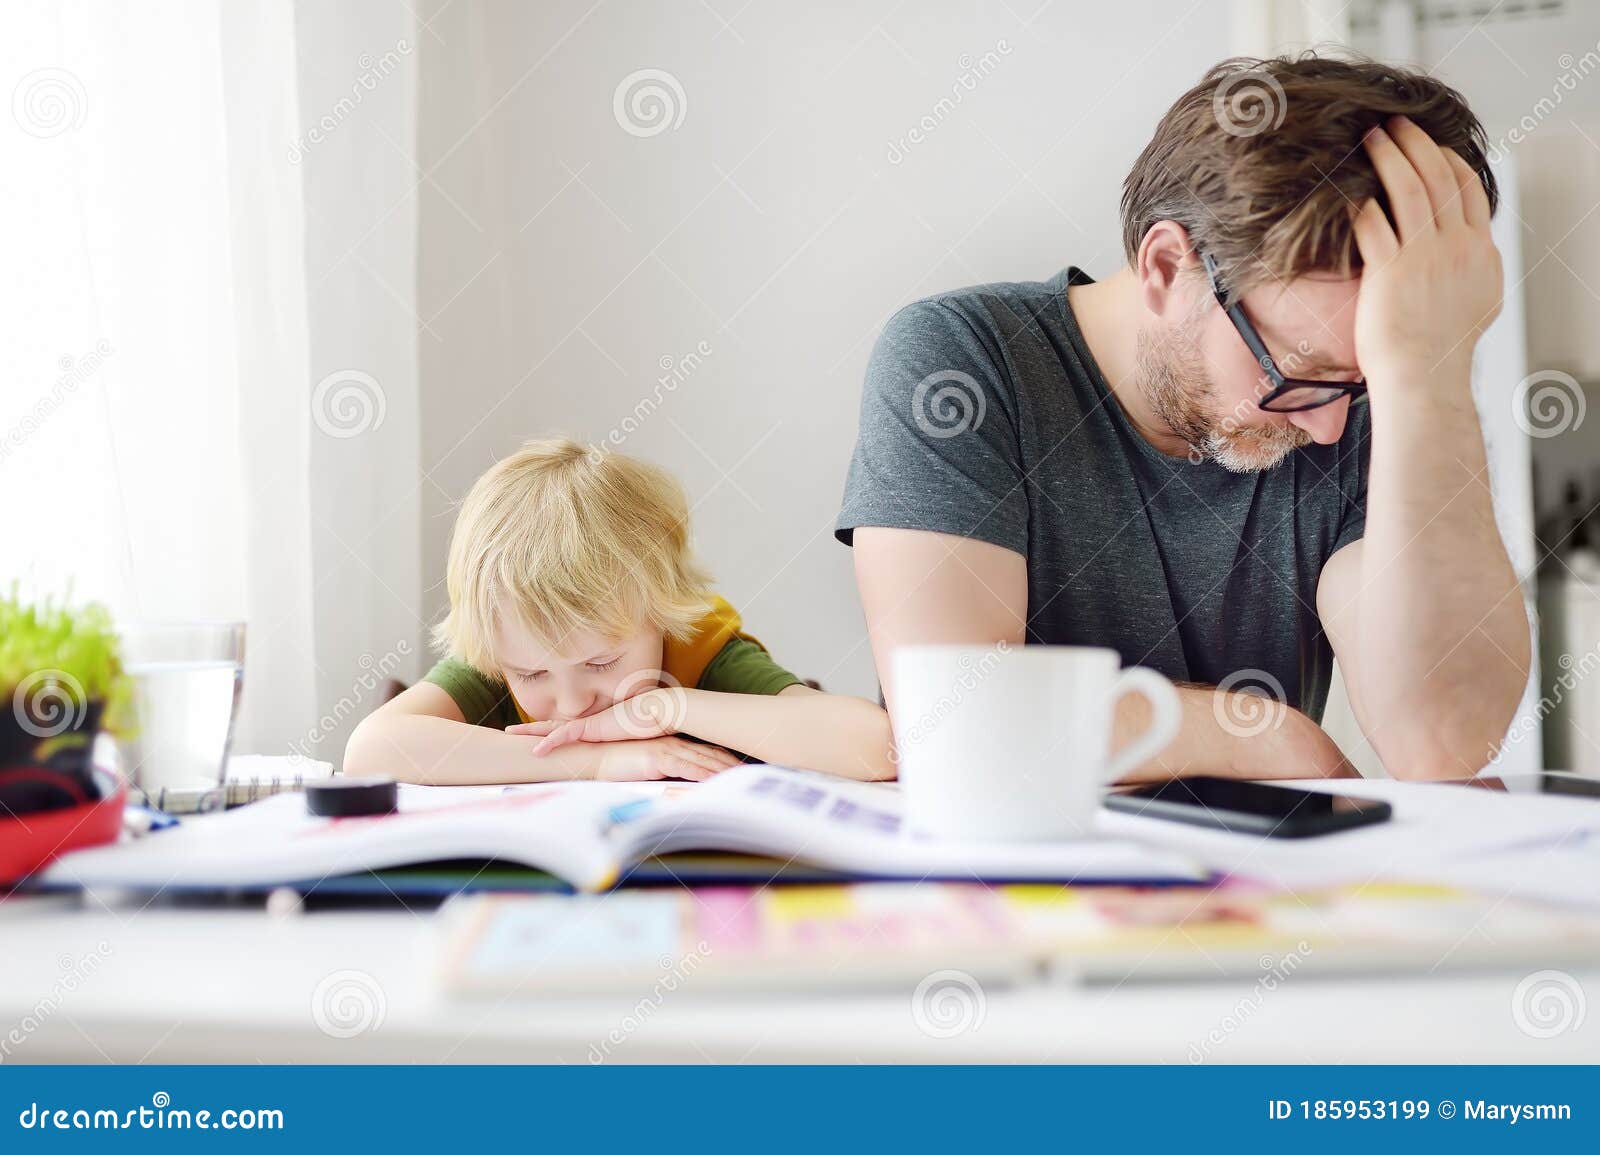 parents refusing homework